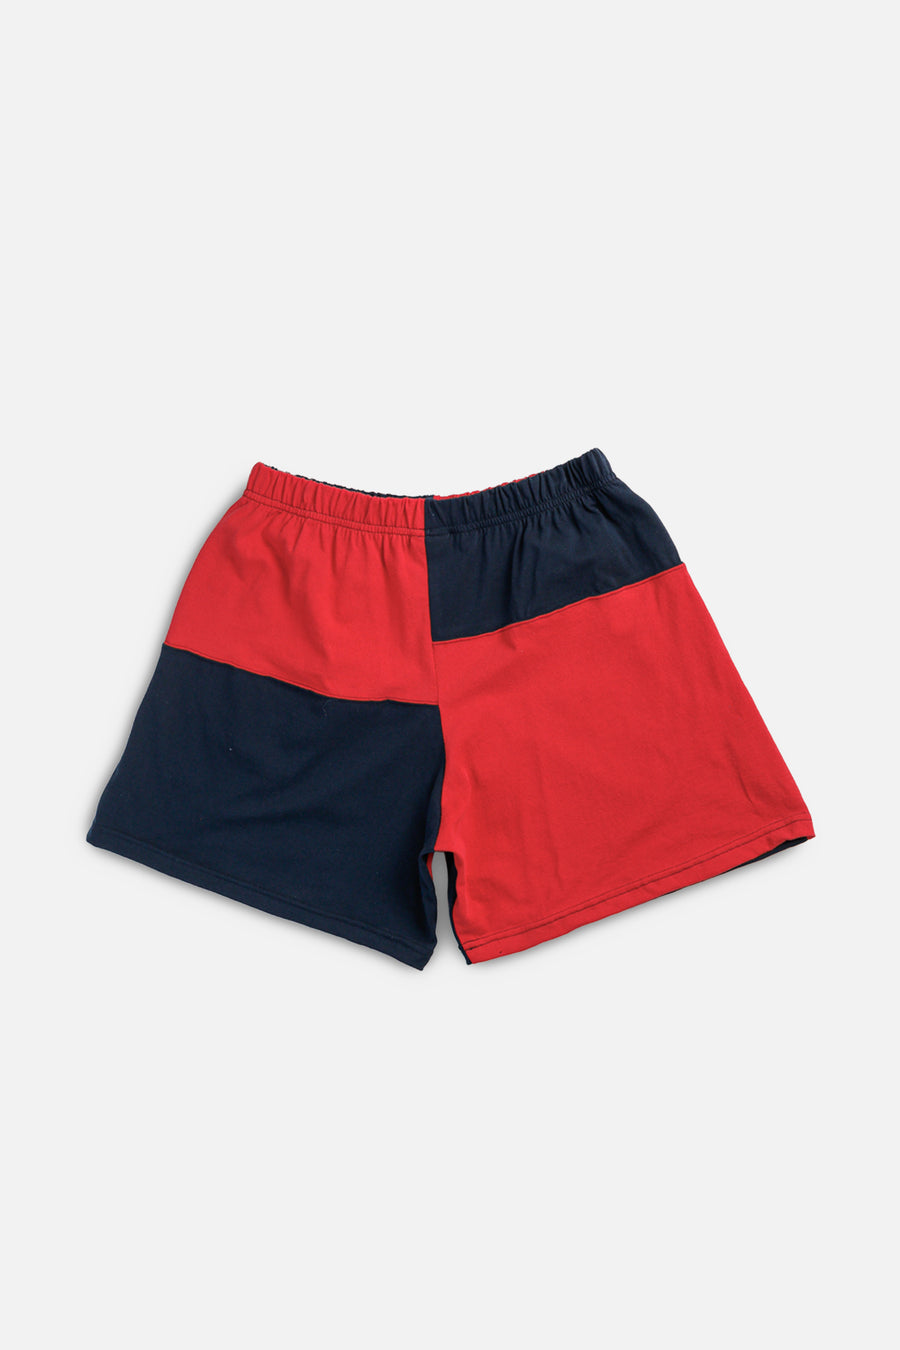 Unisex Rework Boston Red Sox MLB Patchwork Tee Shorts - L